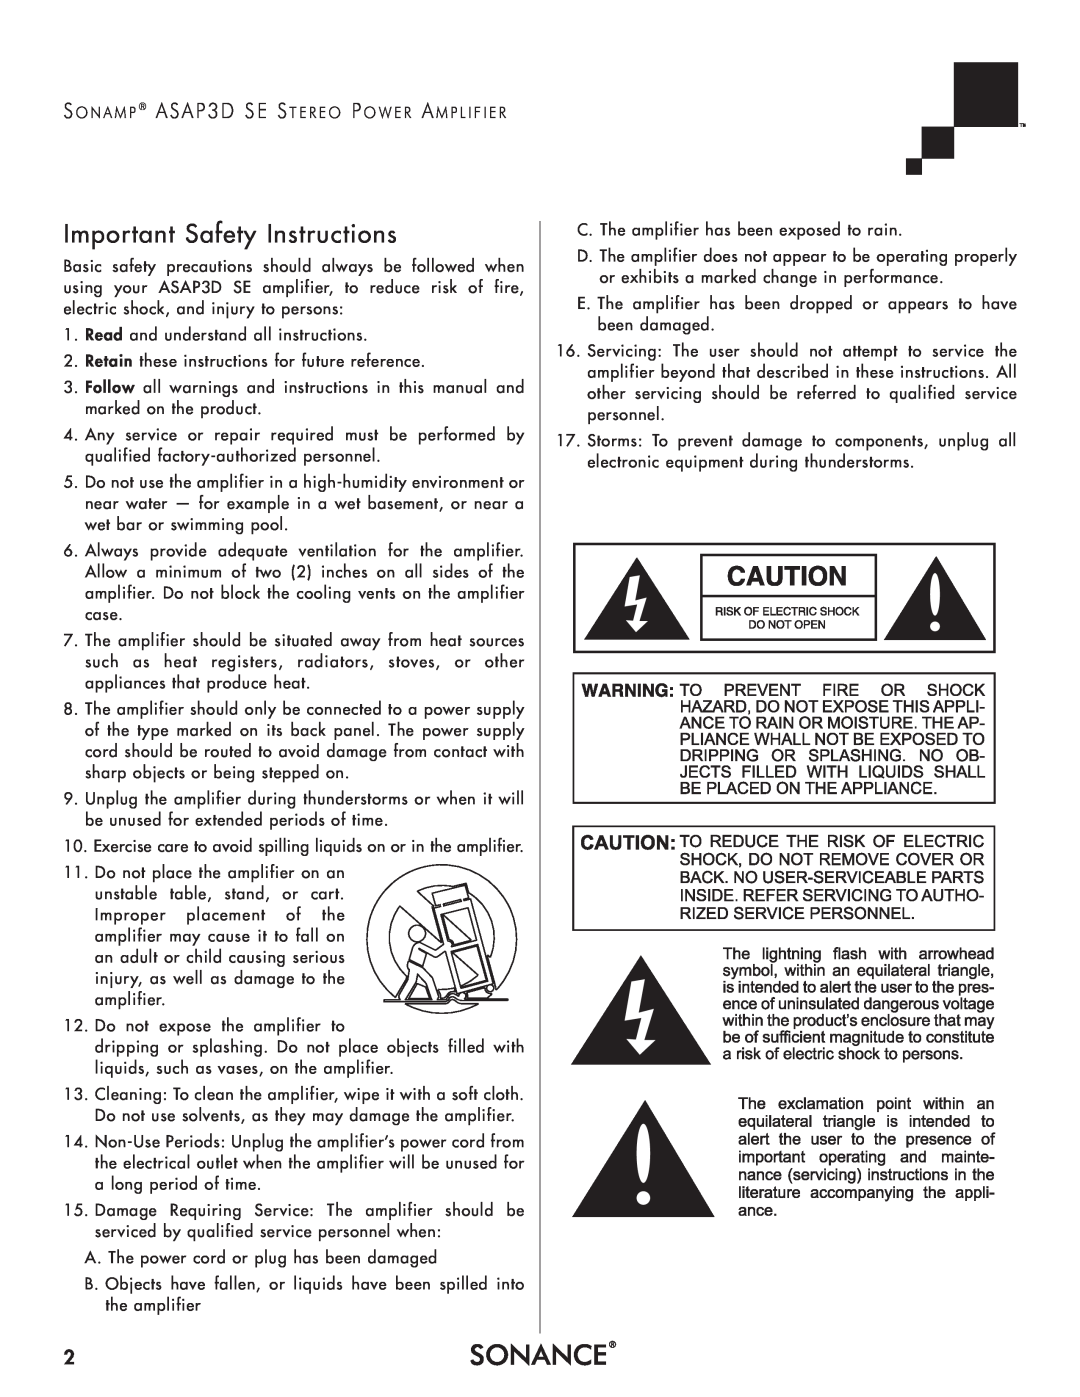 Sonance Sonamp ASAP3D SE Stereo Power Amplifier instruction manual Important Safety Instructions 